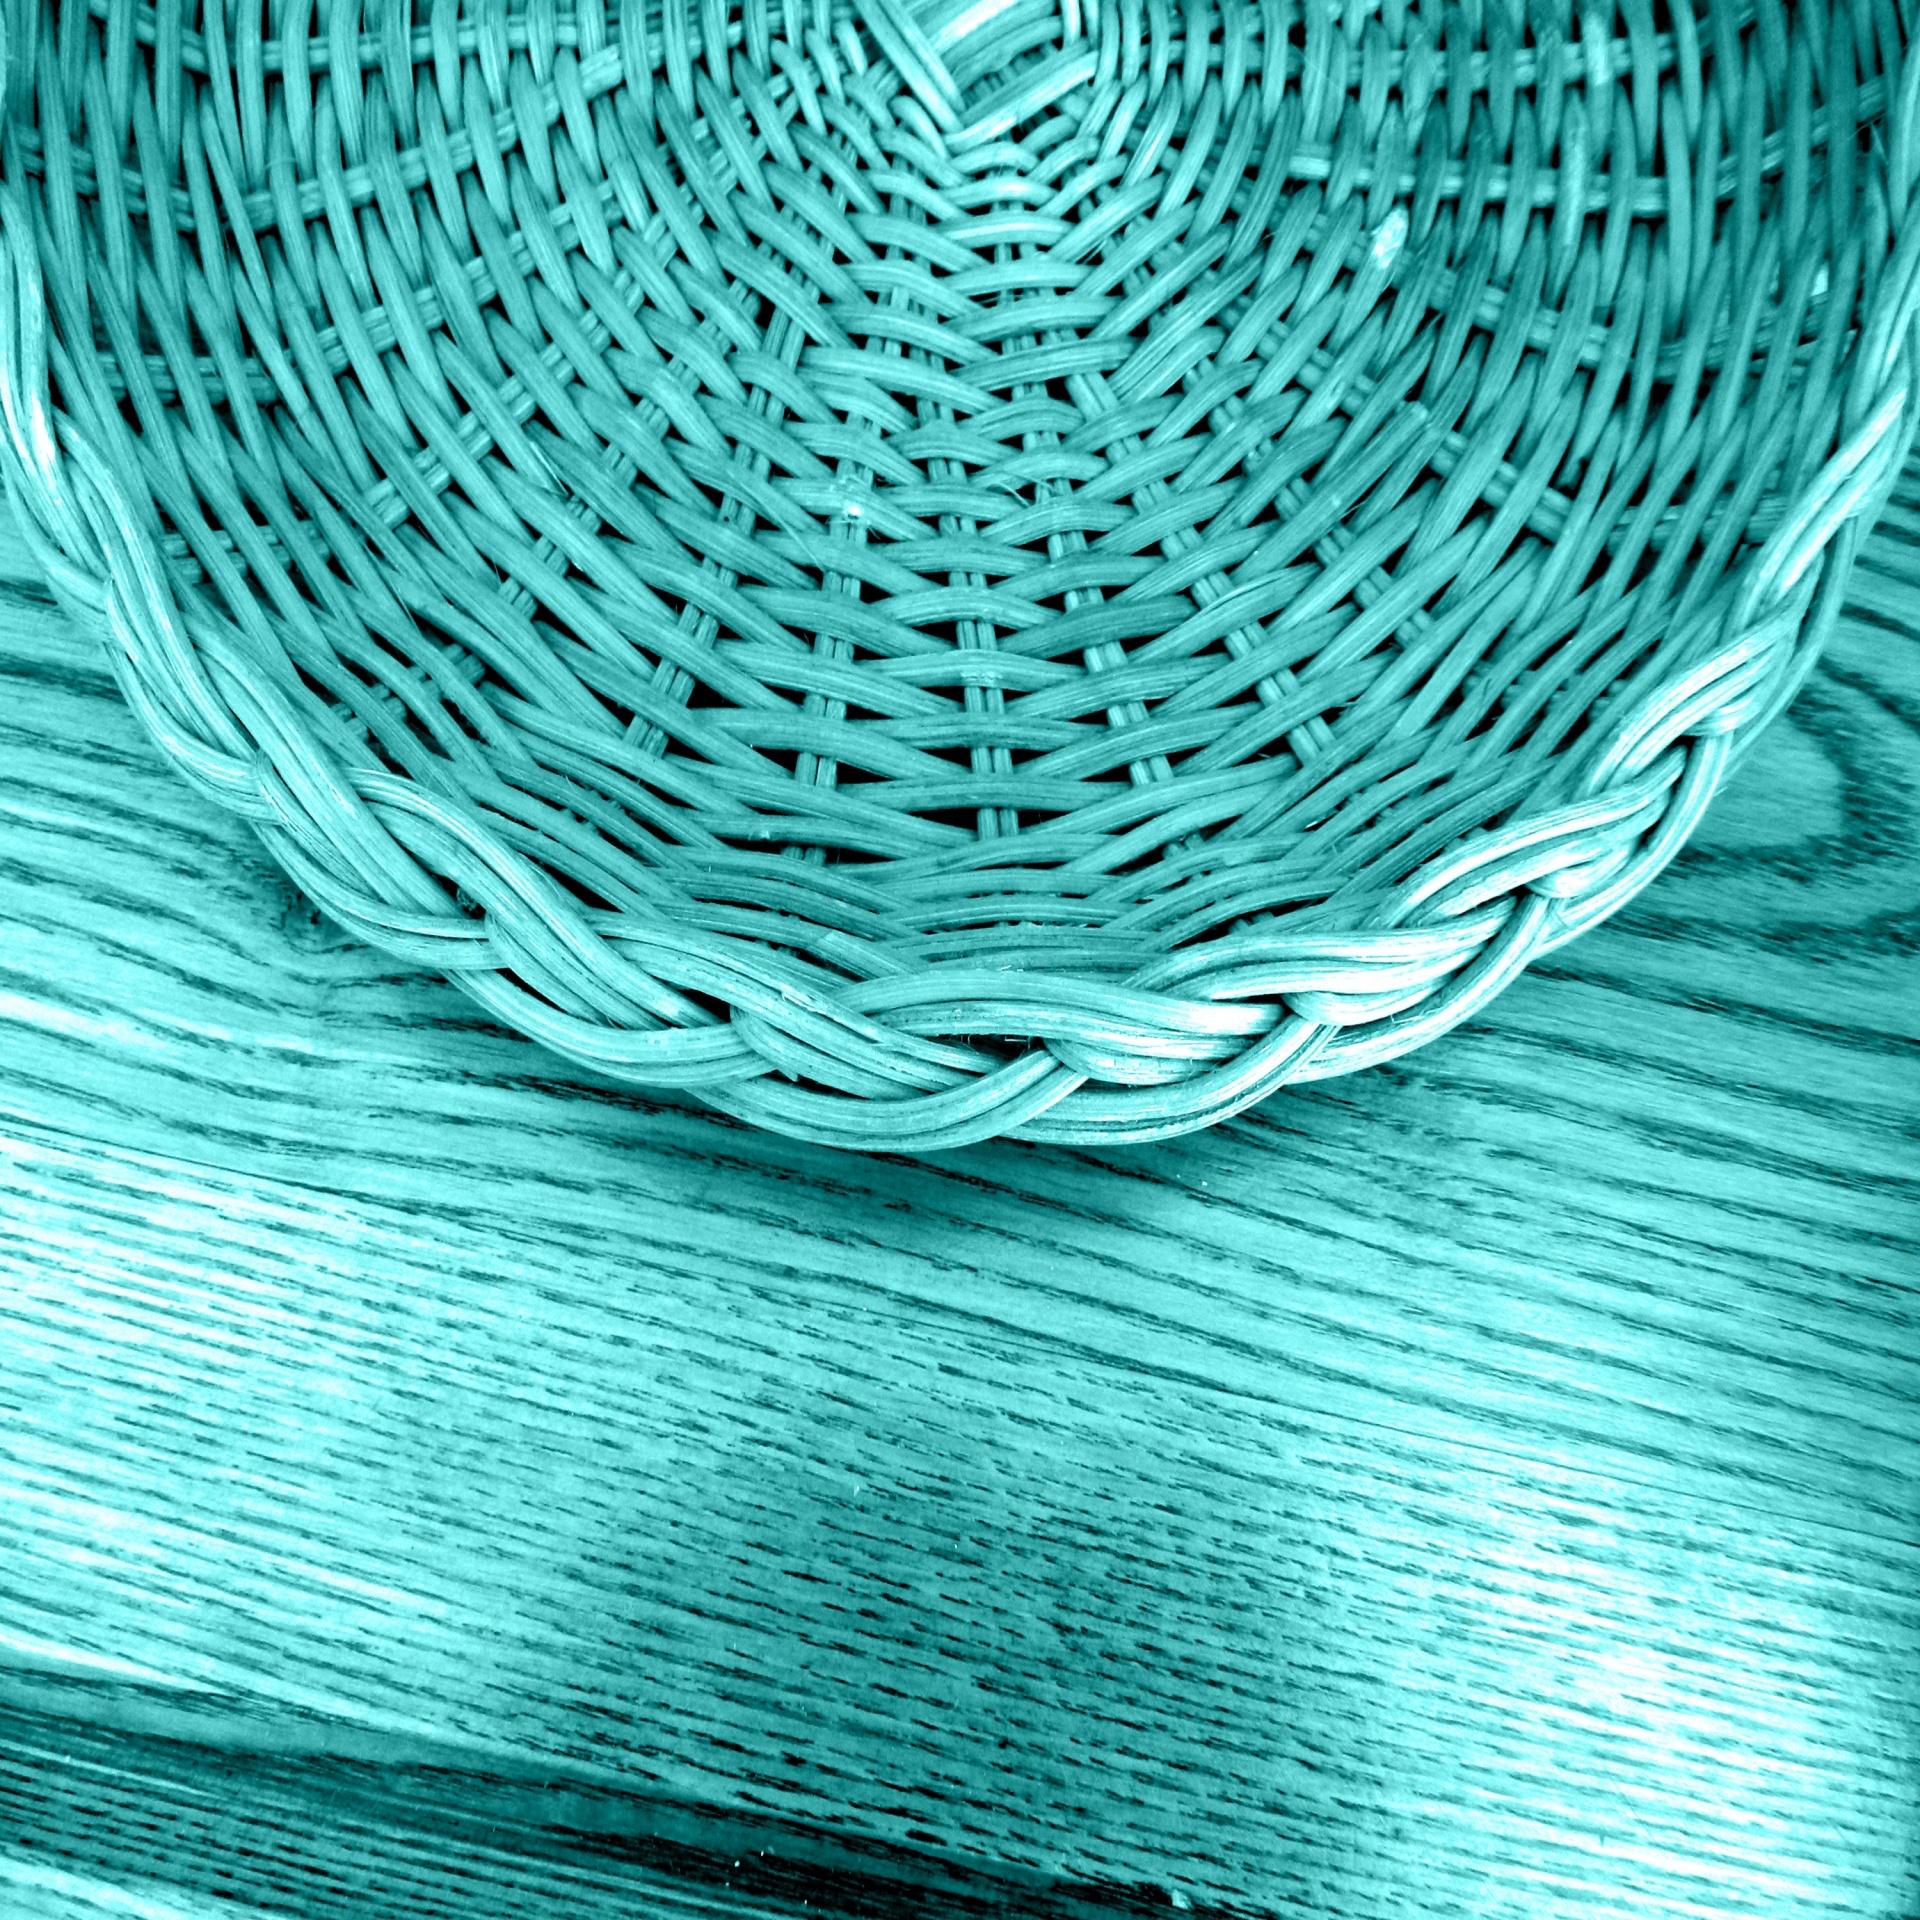 rattan basket wood table free photo